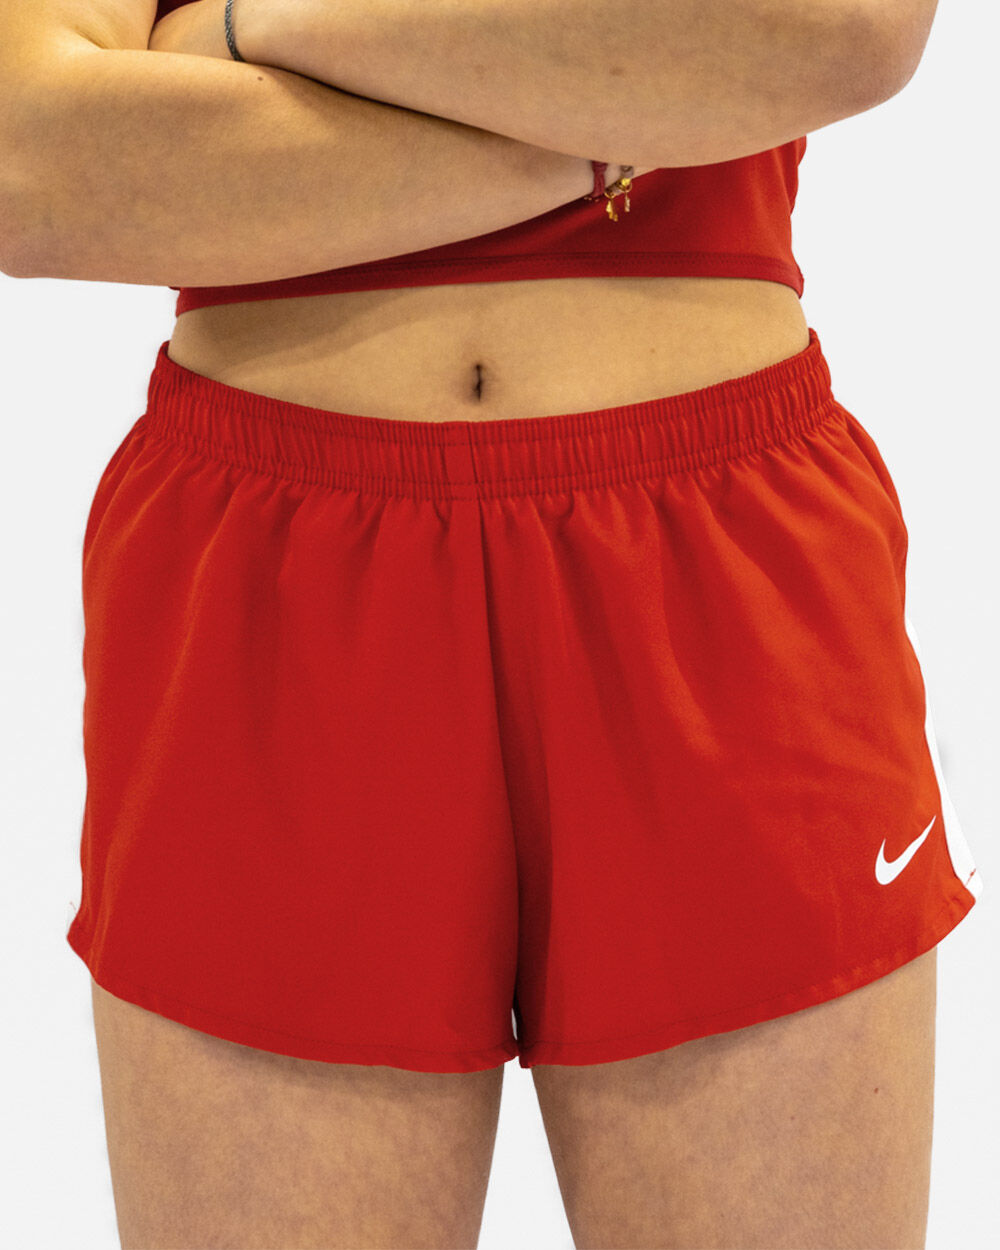 Pantalón corto para correr Nike Stock Rojo para Mujeres - NT0304-657